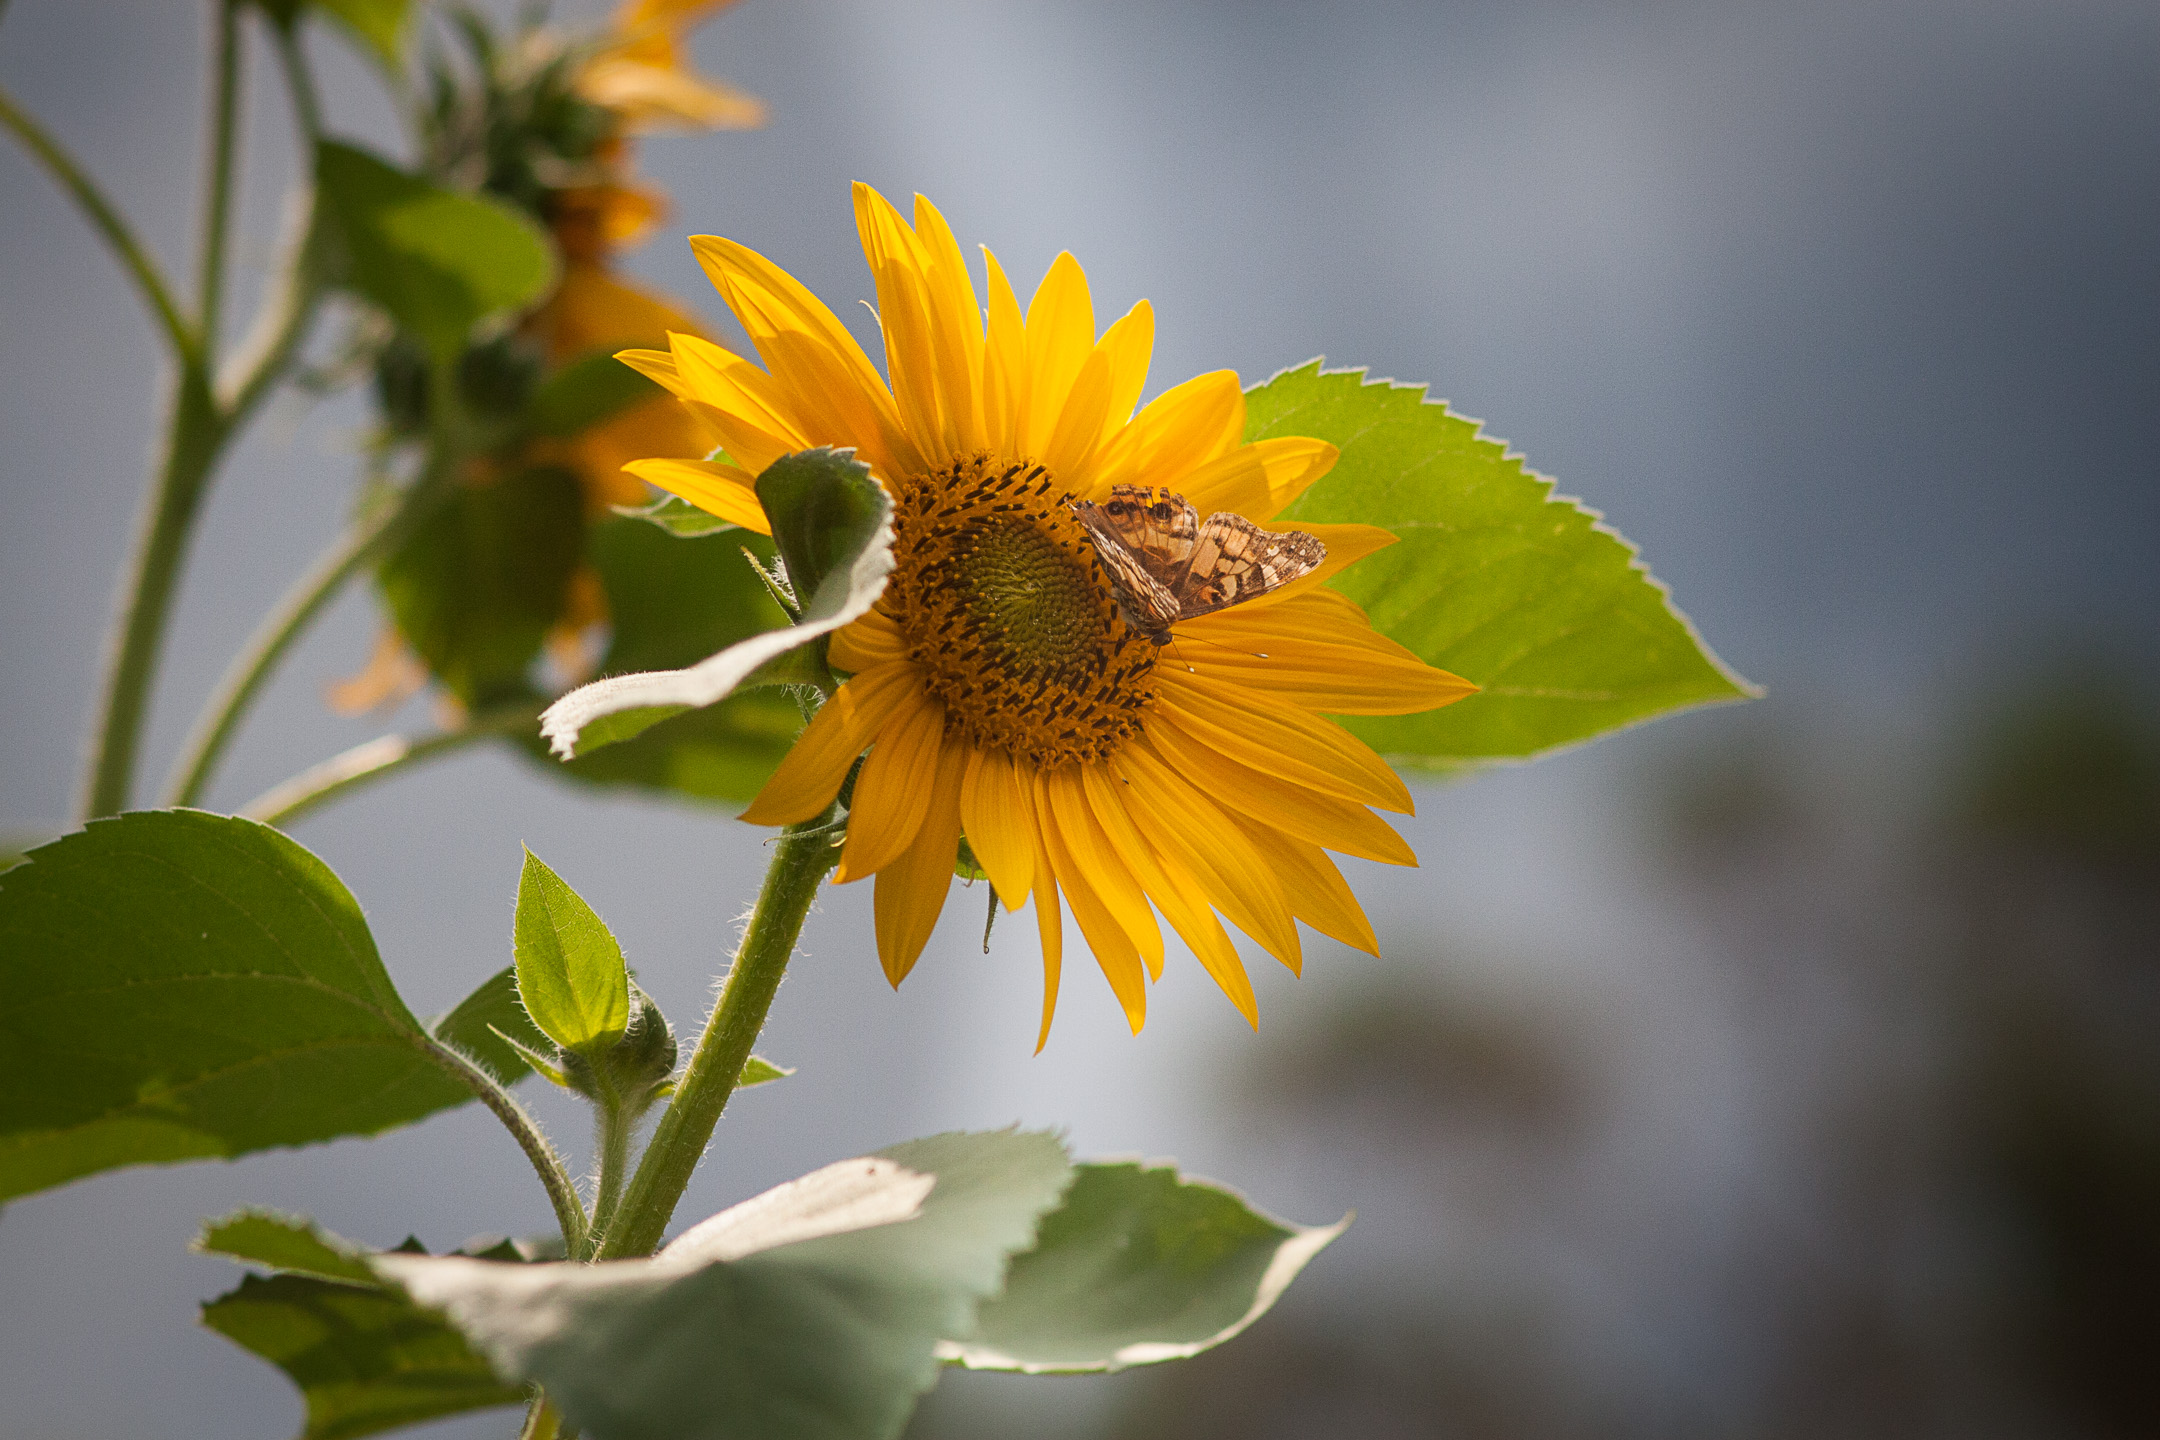 A butterfly on a sunflower